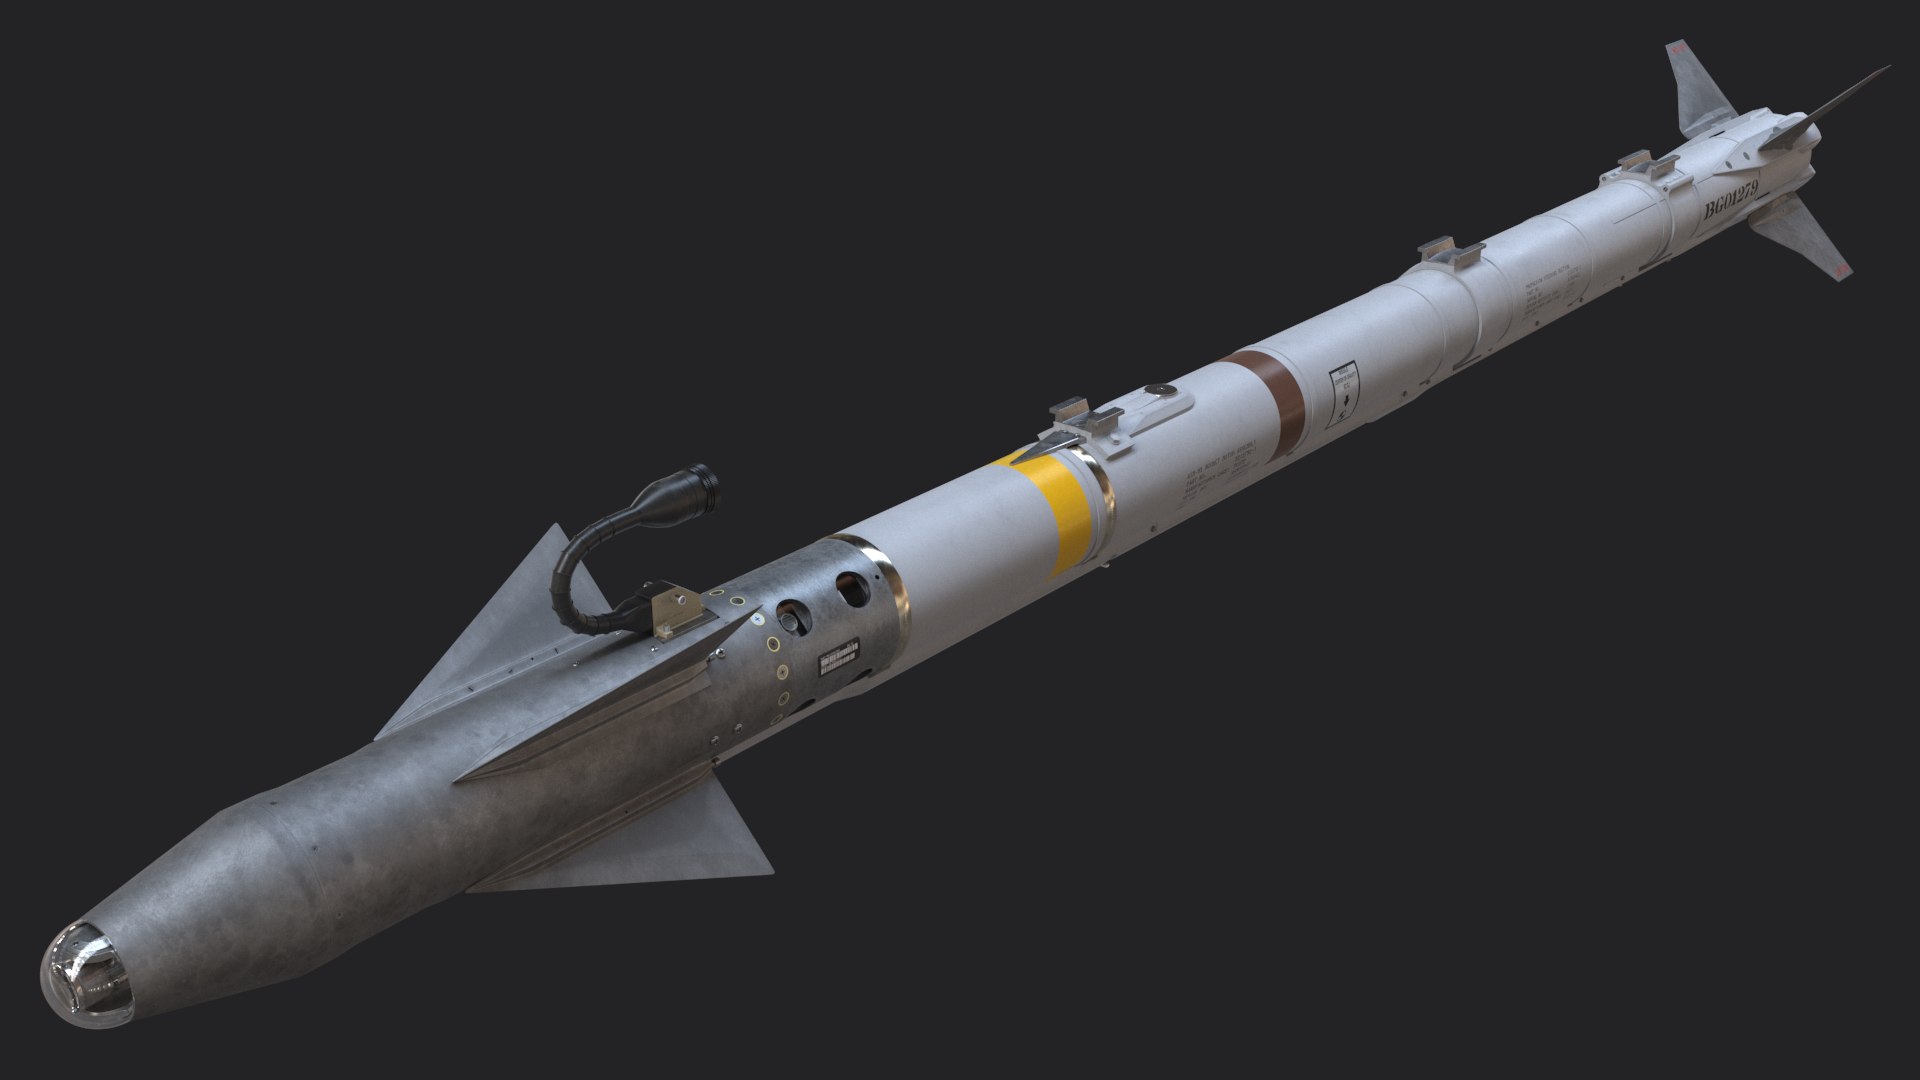 aim-9x sidewinder missile 3d model https://p.turbosquid.com/ts-thumb/29/FbWZyc/i1/aim9x_001/png/1616050577/1920x1080/fit_q87/651c4589340af7030d20a7470544cc93a96f1c42/aim9x_001.jpg